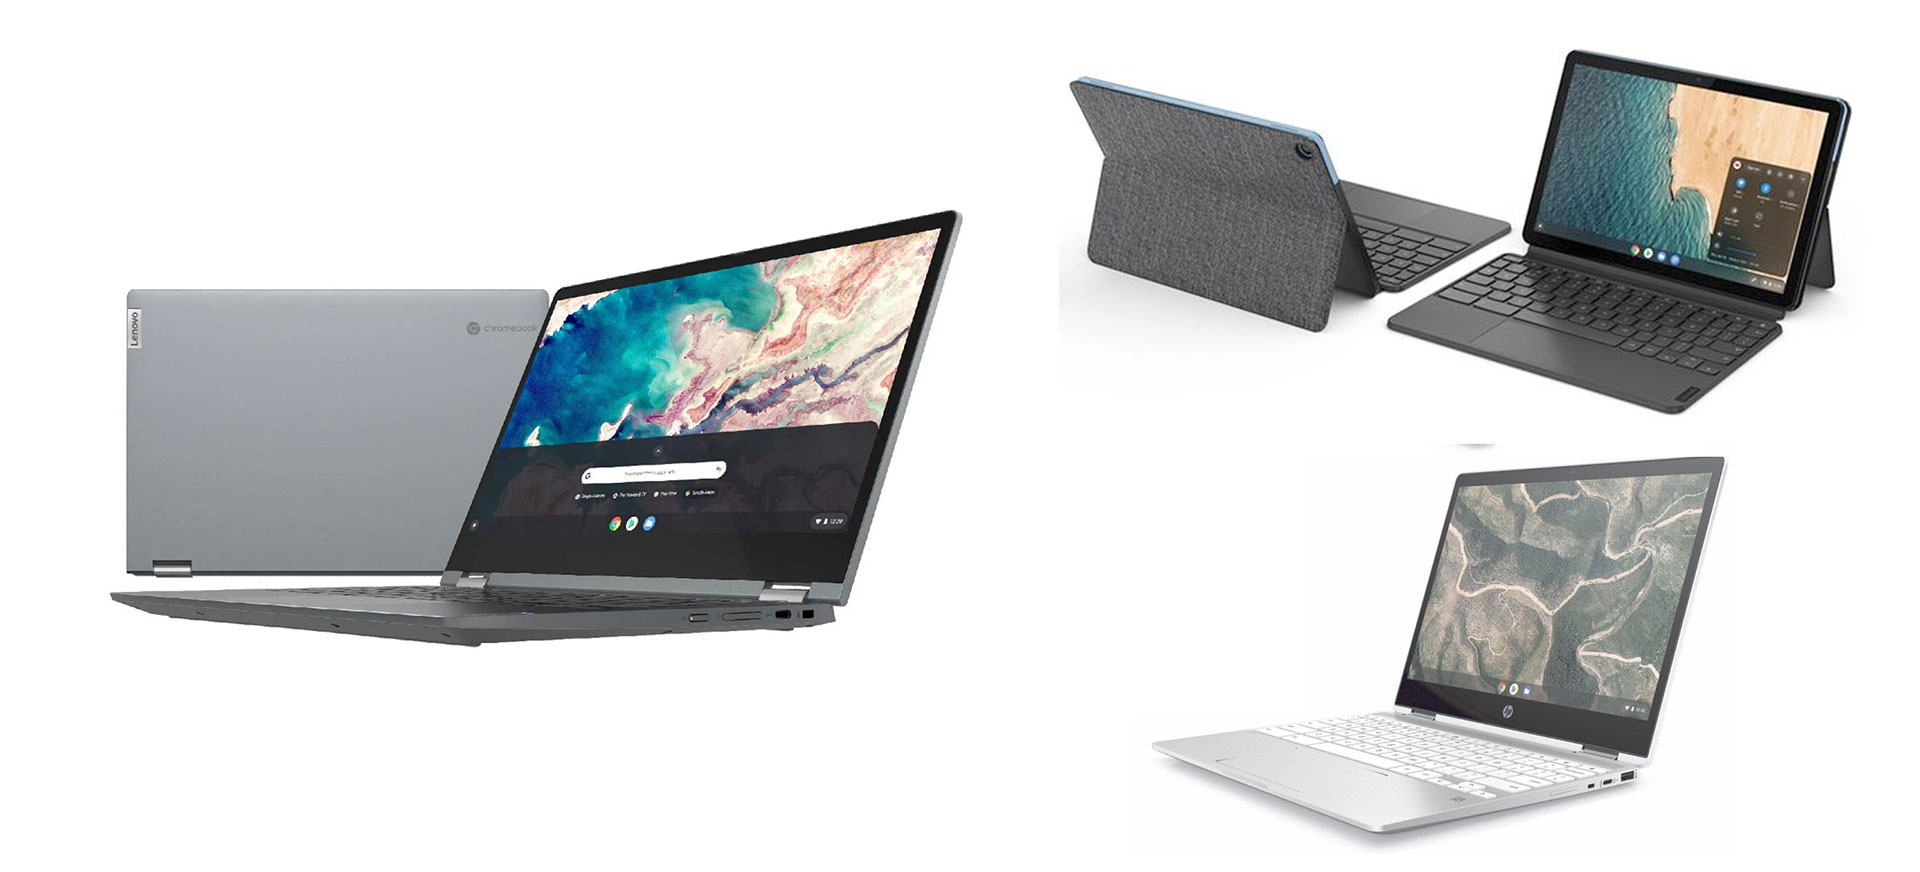 Budget 2-in-1 Chromebooks: Lenovo Flex 5, Lenovo Duet and HP X360 12